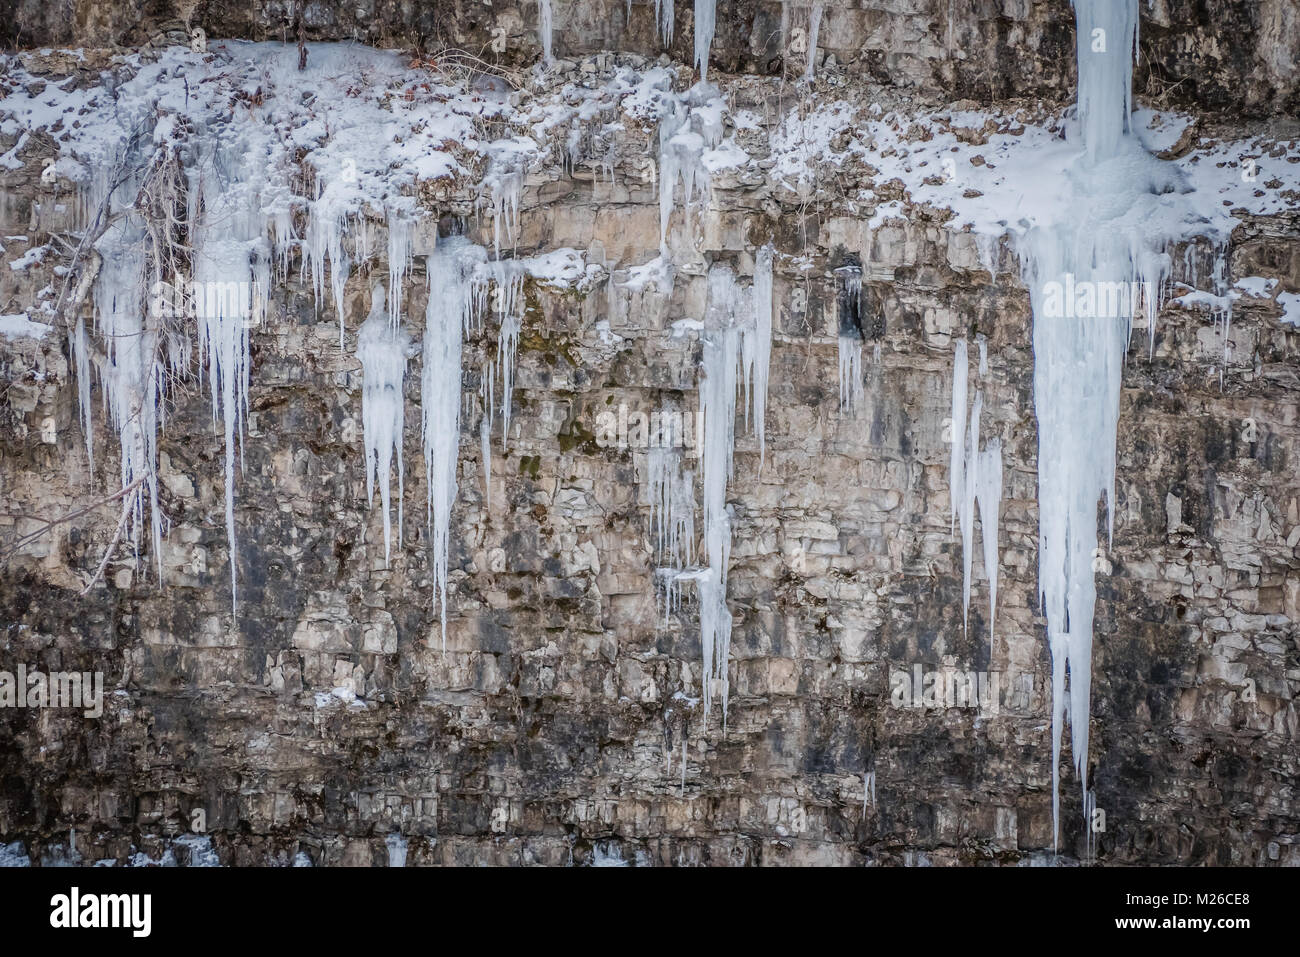 Las cascadas congeladas Foto de stock